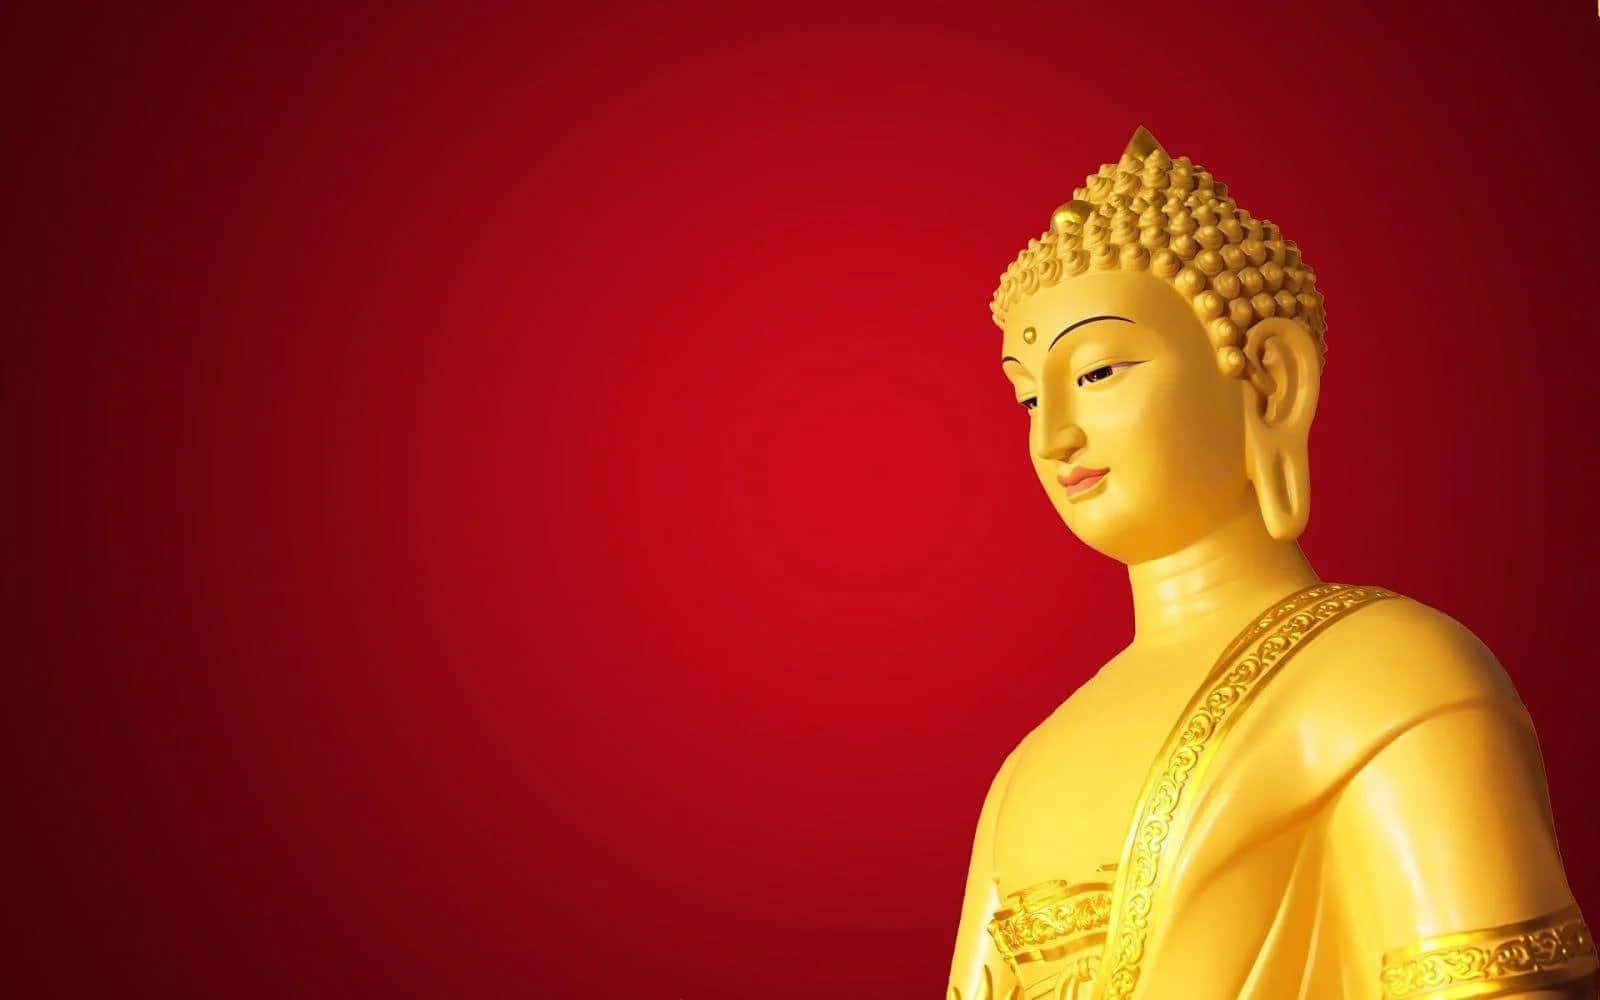 Gautama Buddha seated in meditation